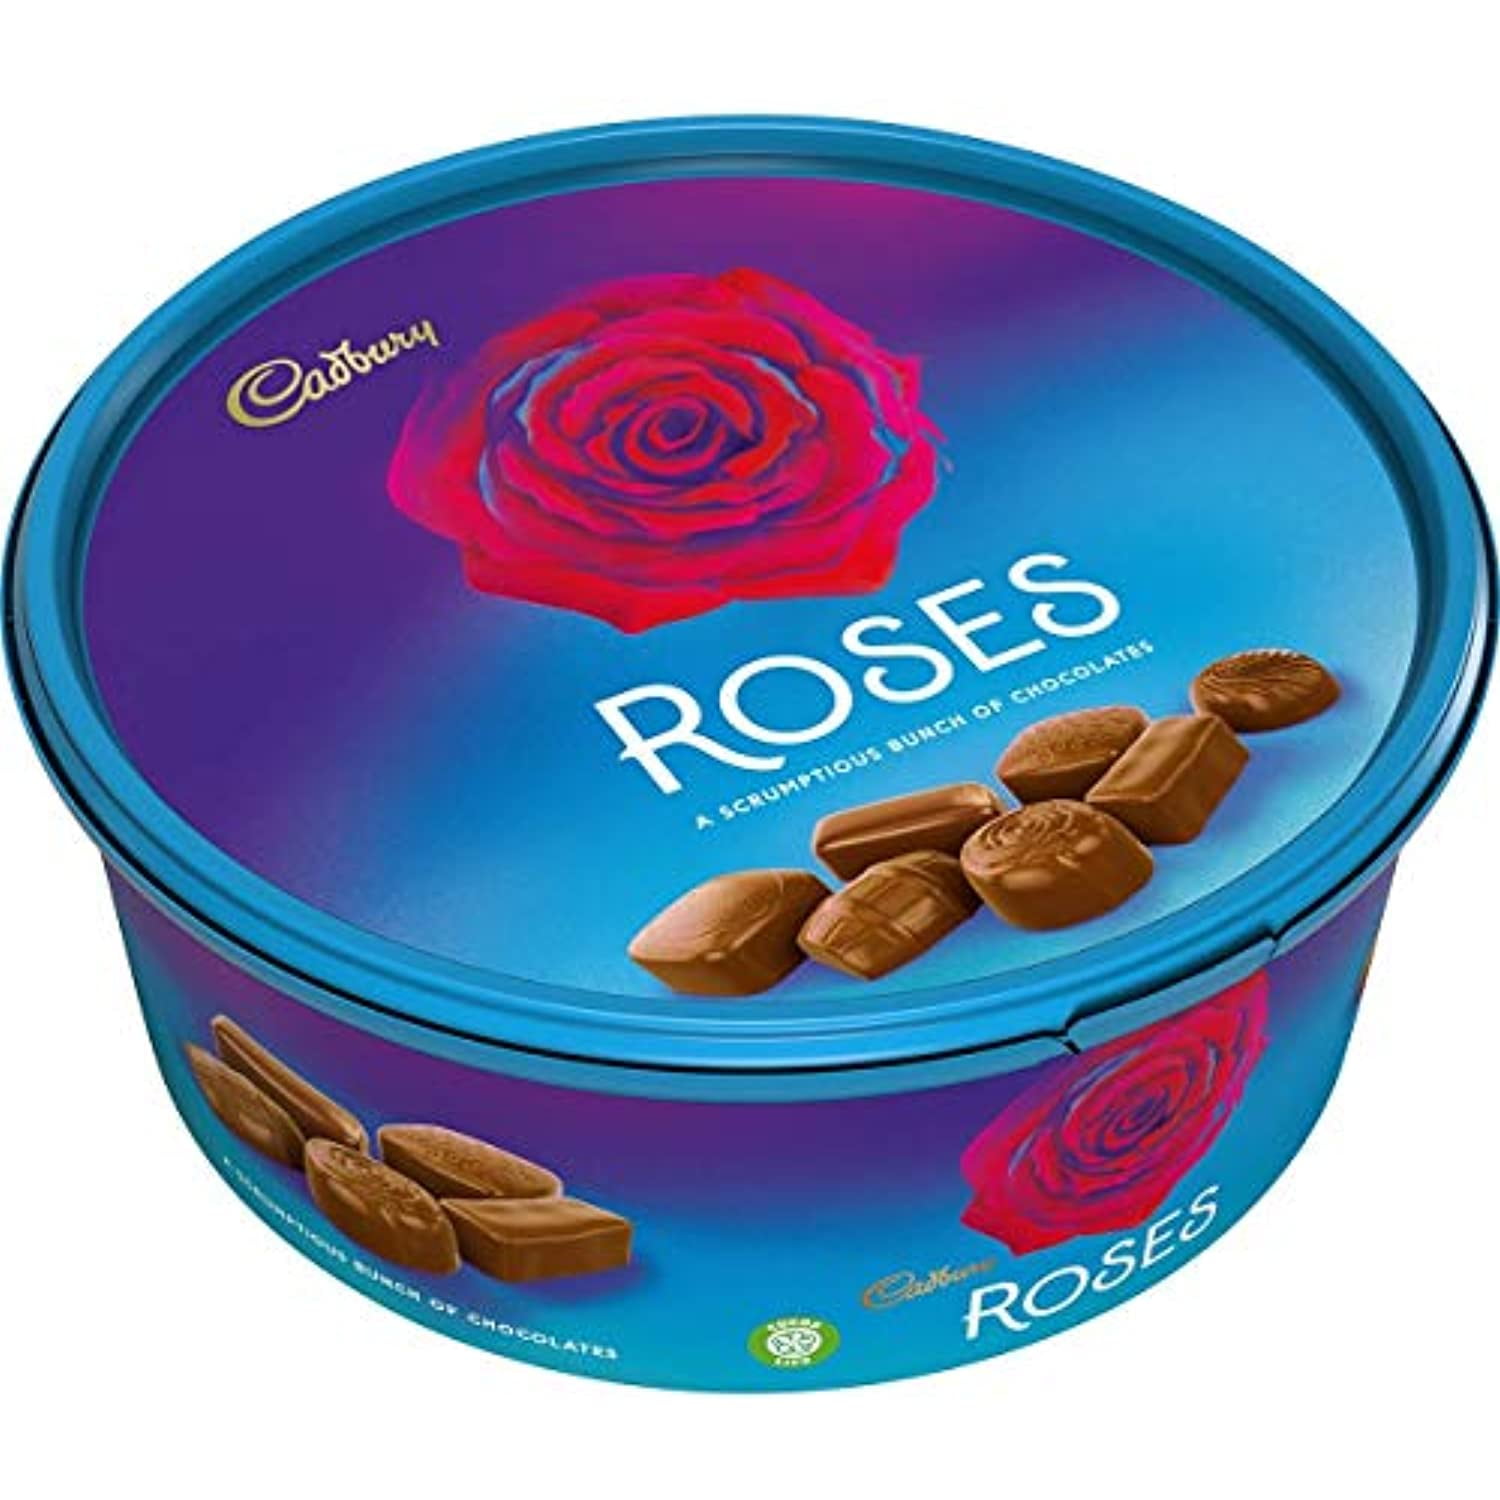 Chocolate Rose Gift Set - indi chocolate